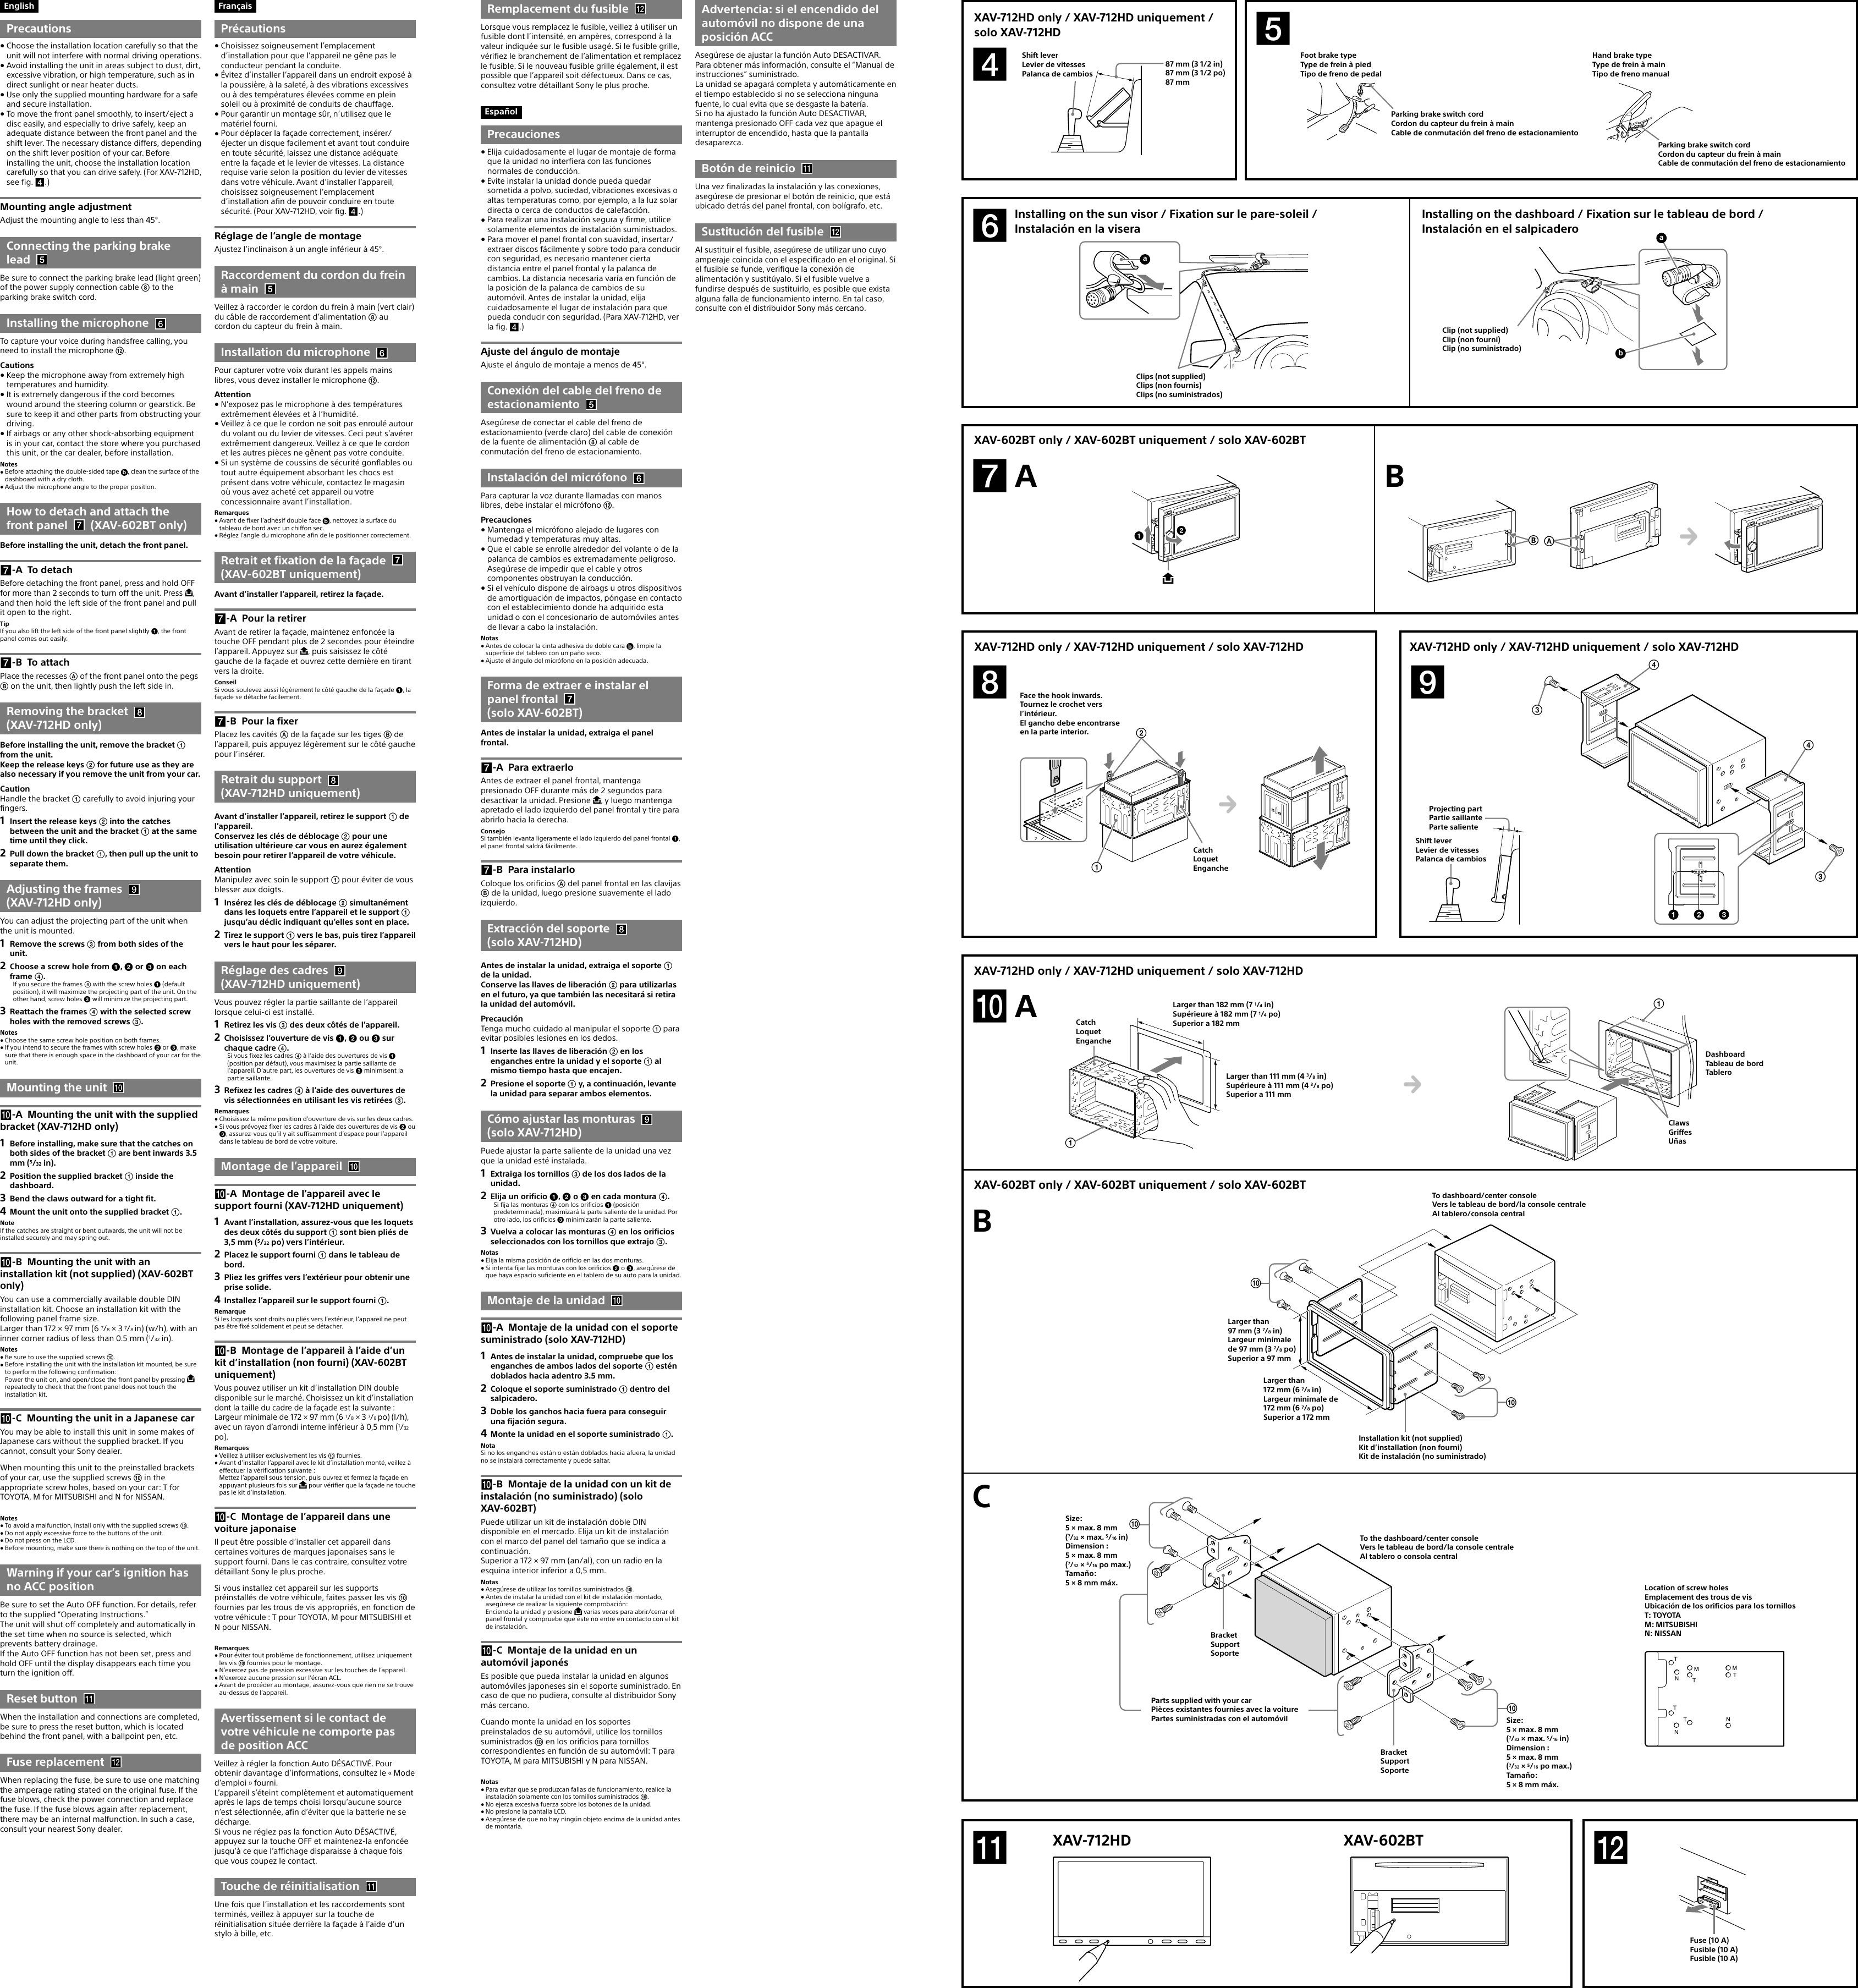 Sony Xav 712hd Installation Connections Manual